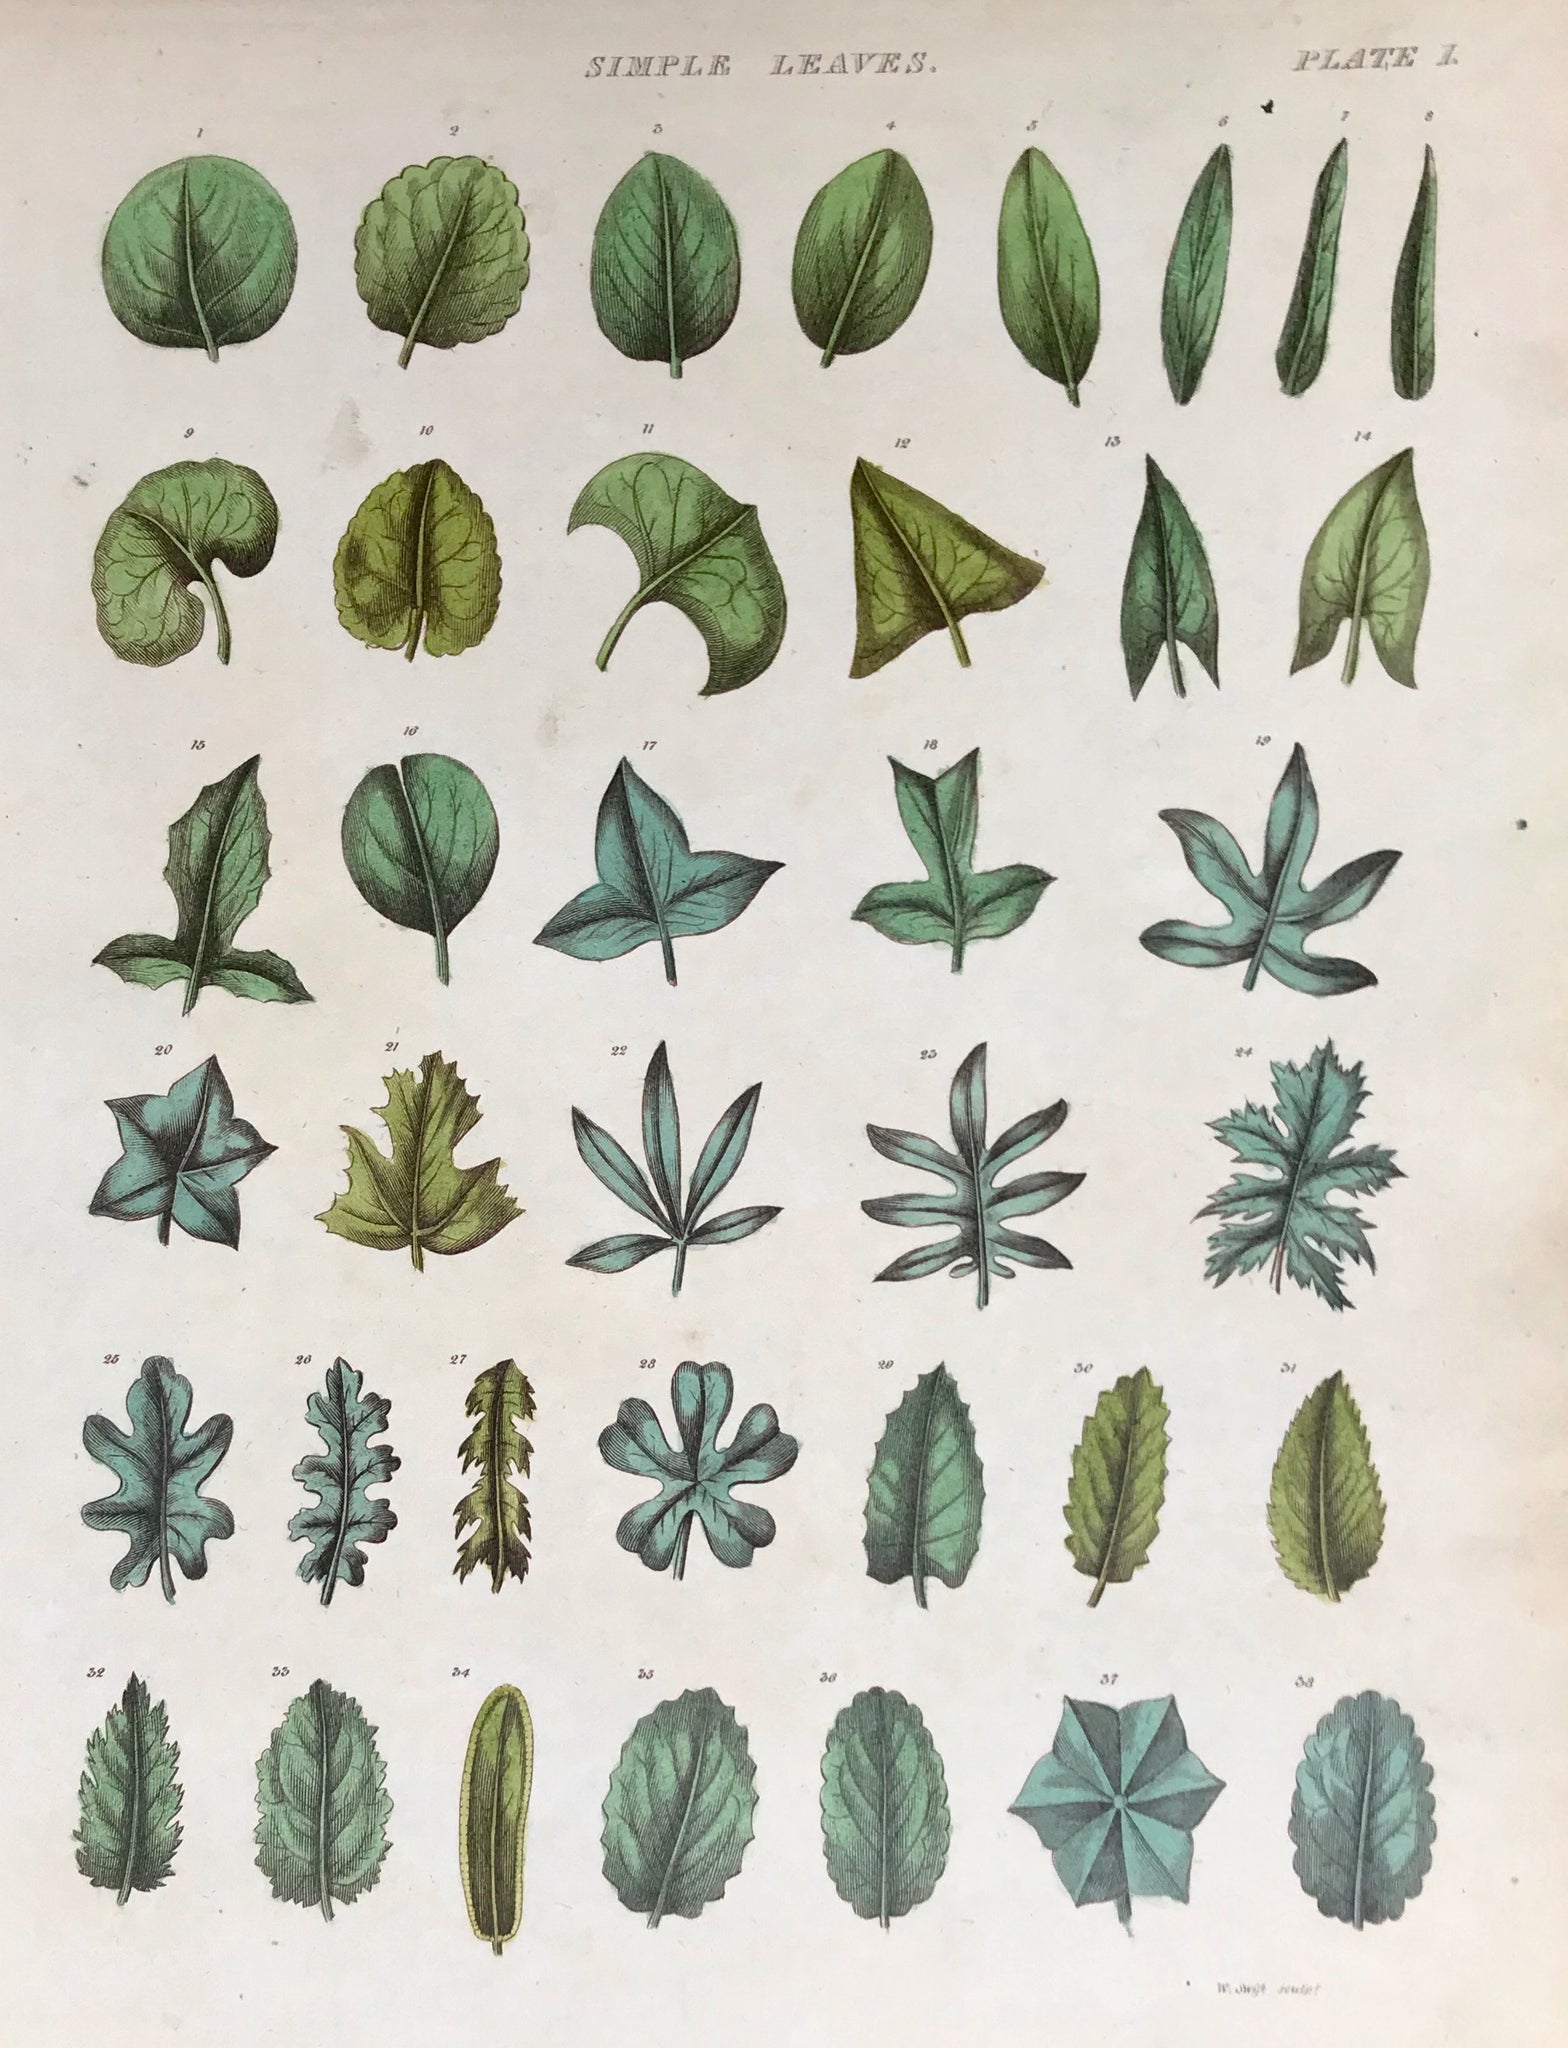 Tree leaves, Green, botanicals, interesting